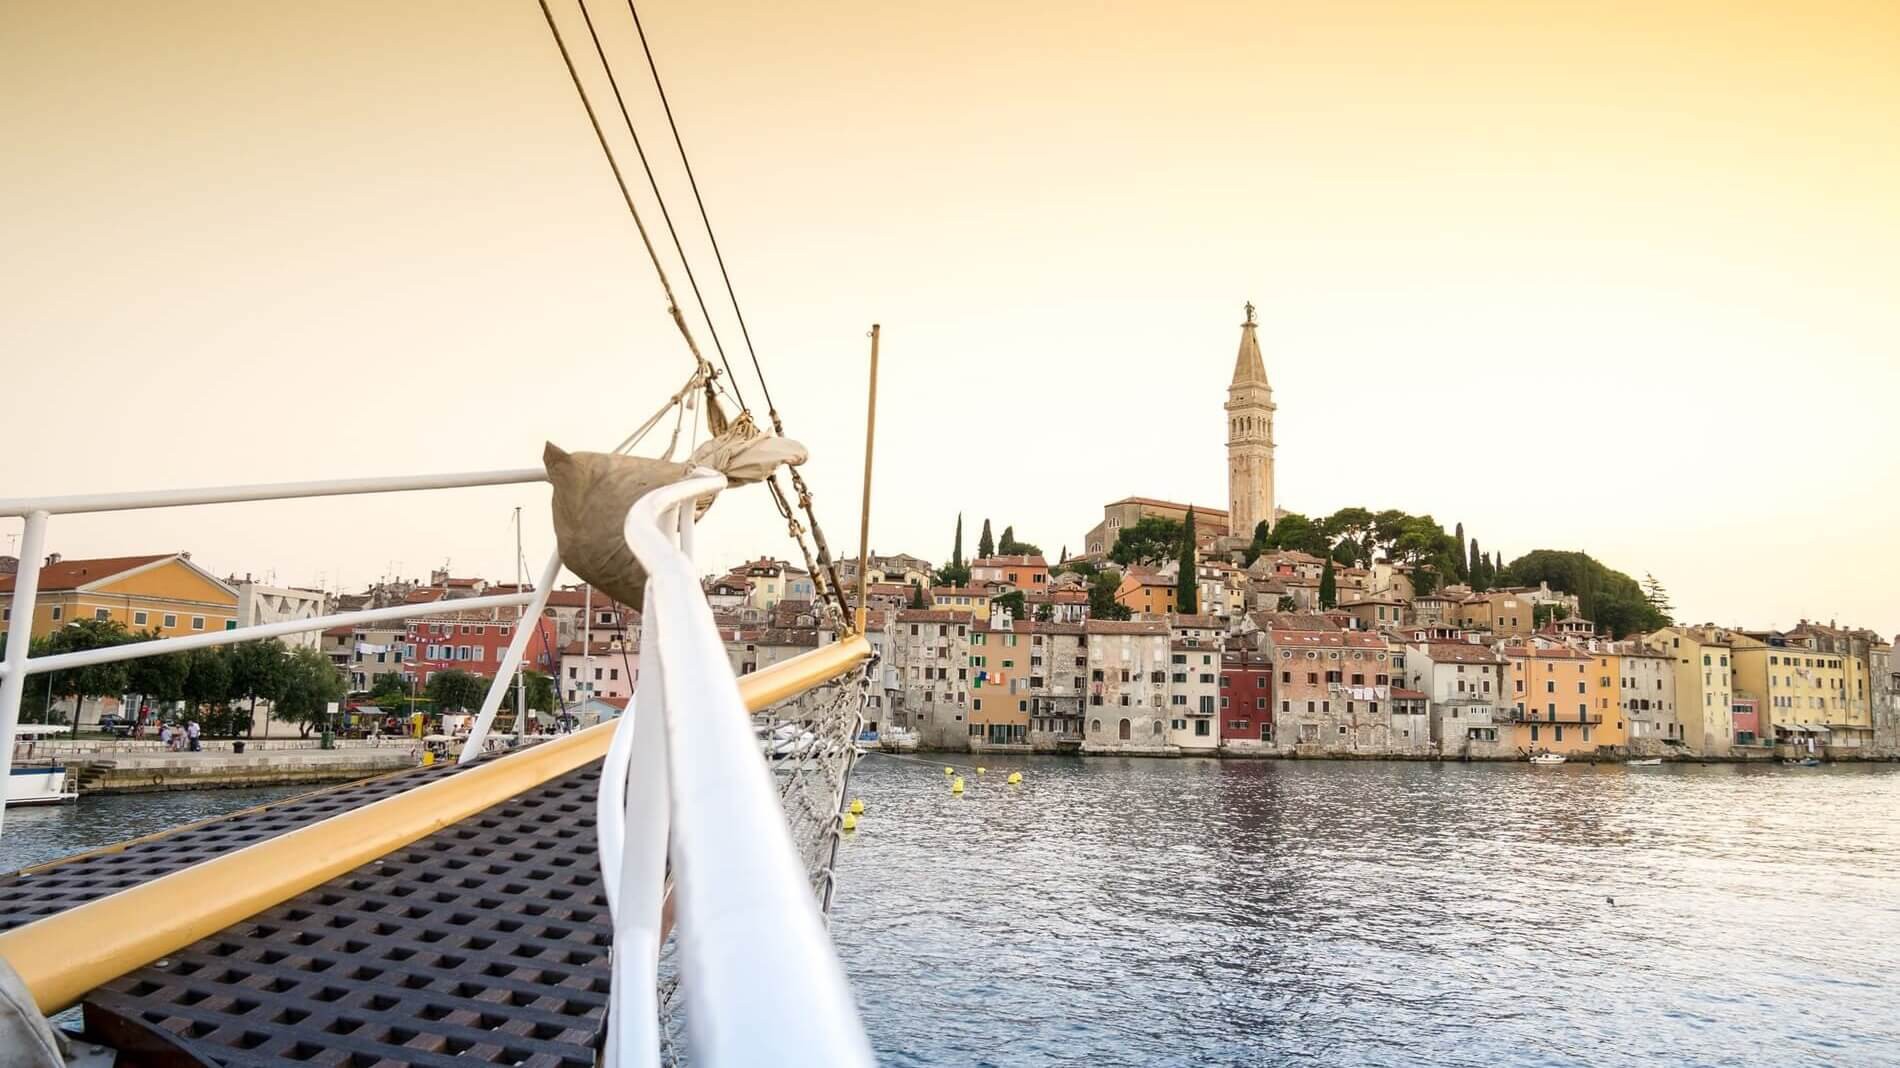 Rovinj - Adriatic Sea | Croatia Cruise Croatia Cruise